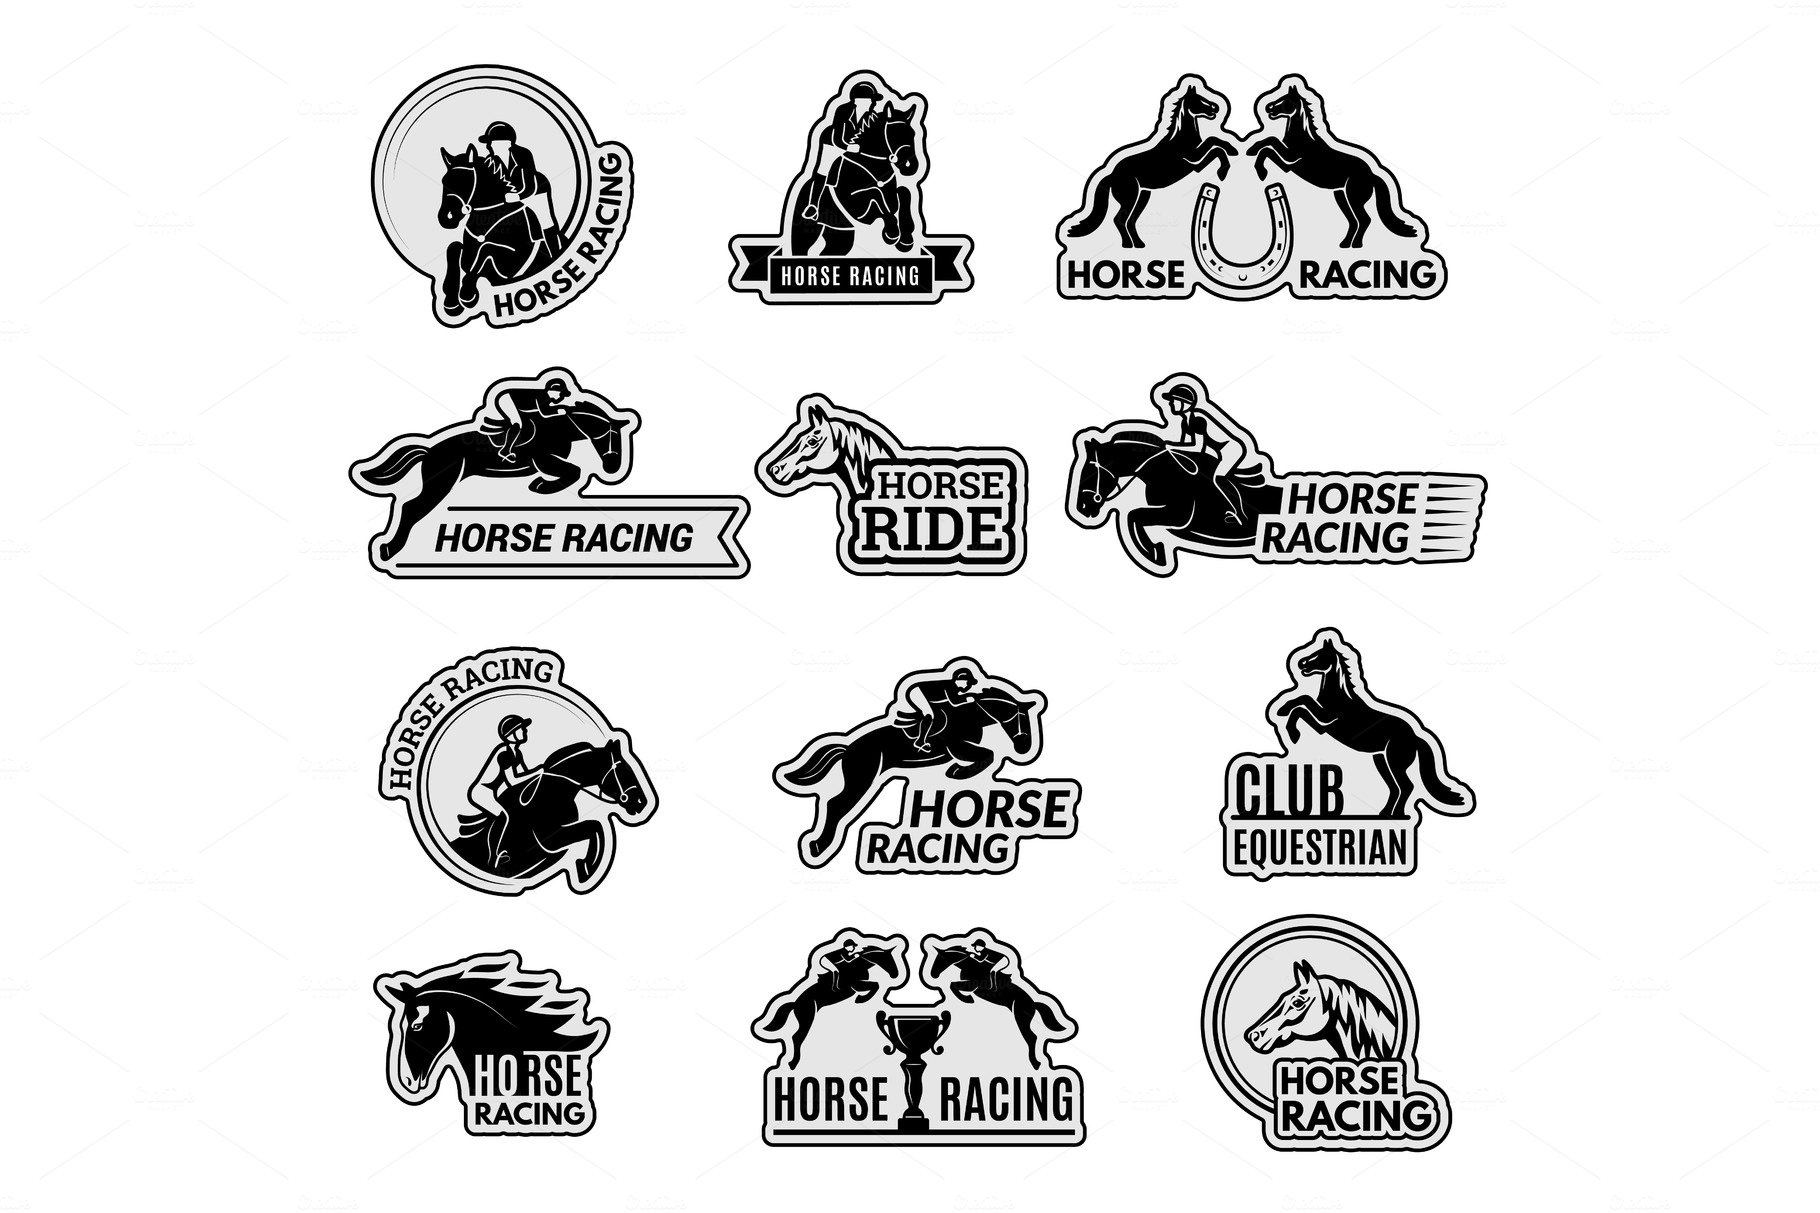 Equestrian club logo. Racehorse cover image.